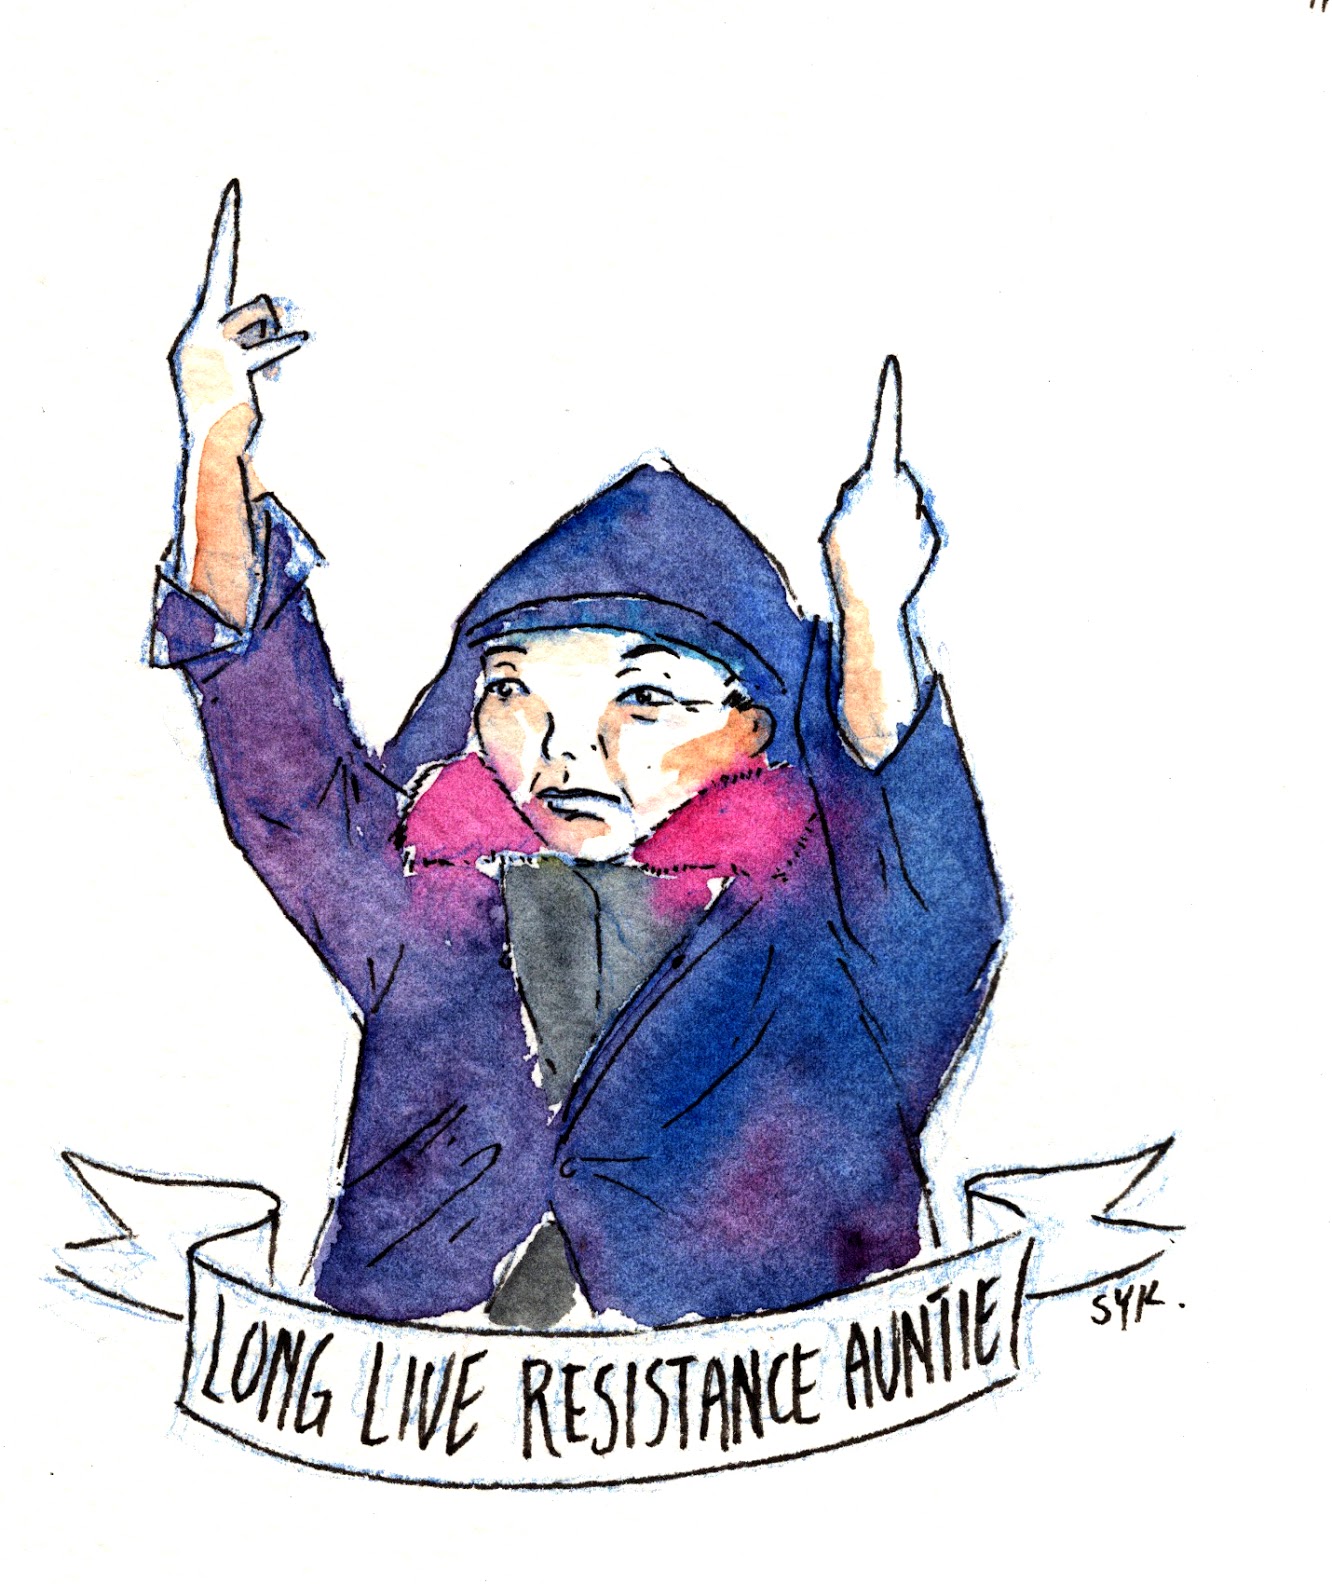 resistance auntie illustration